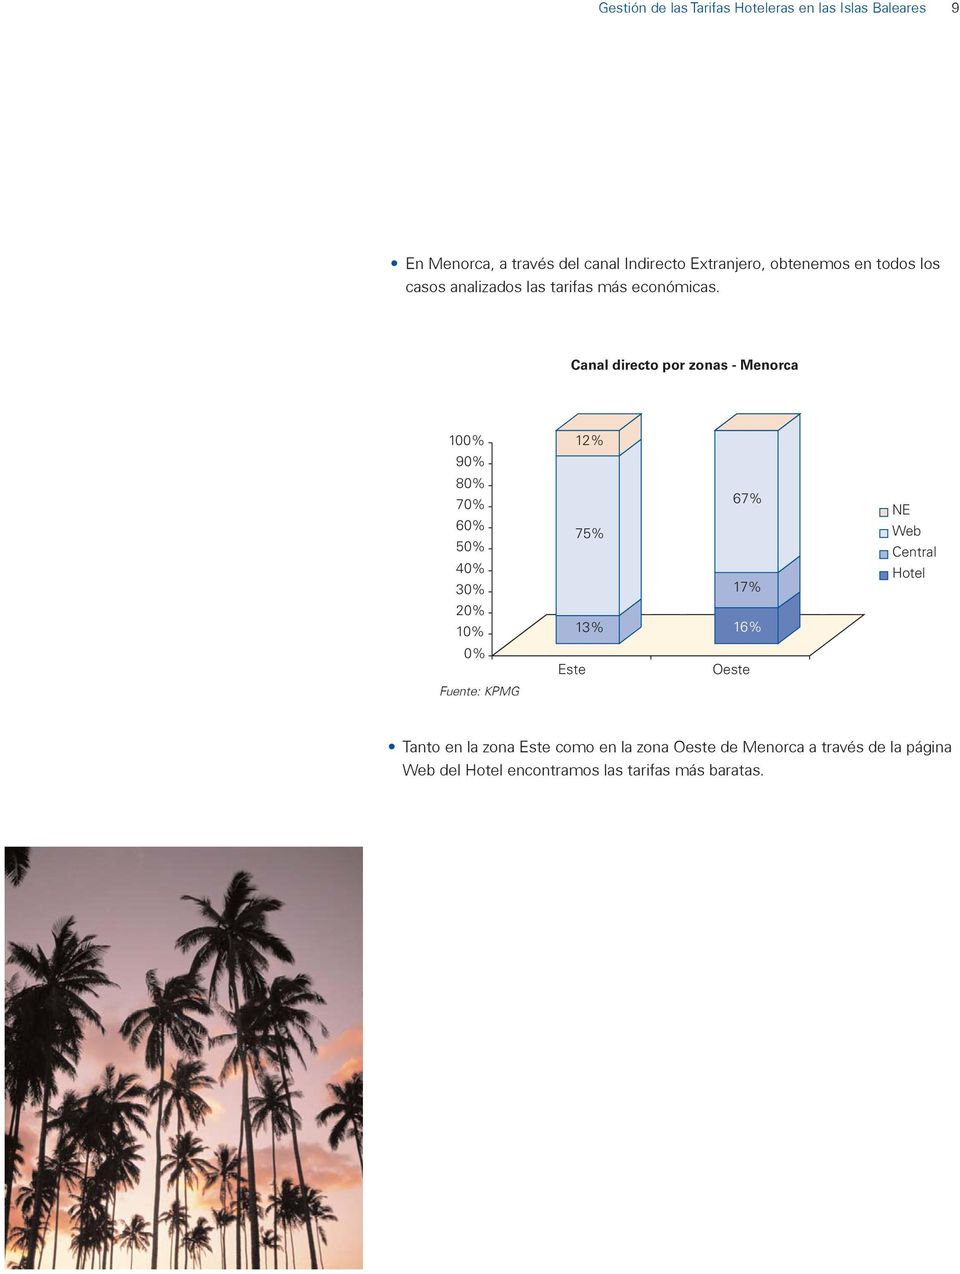 Canal directo por zonas - Menorca 12% 7 3 75% 13% 67% 17% 16% Web Central Hotel Este Oeste Tanto